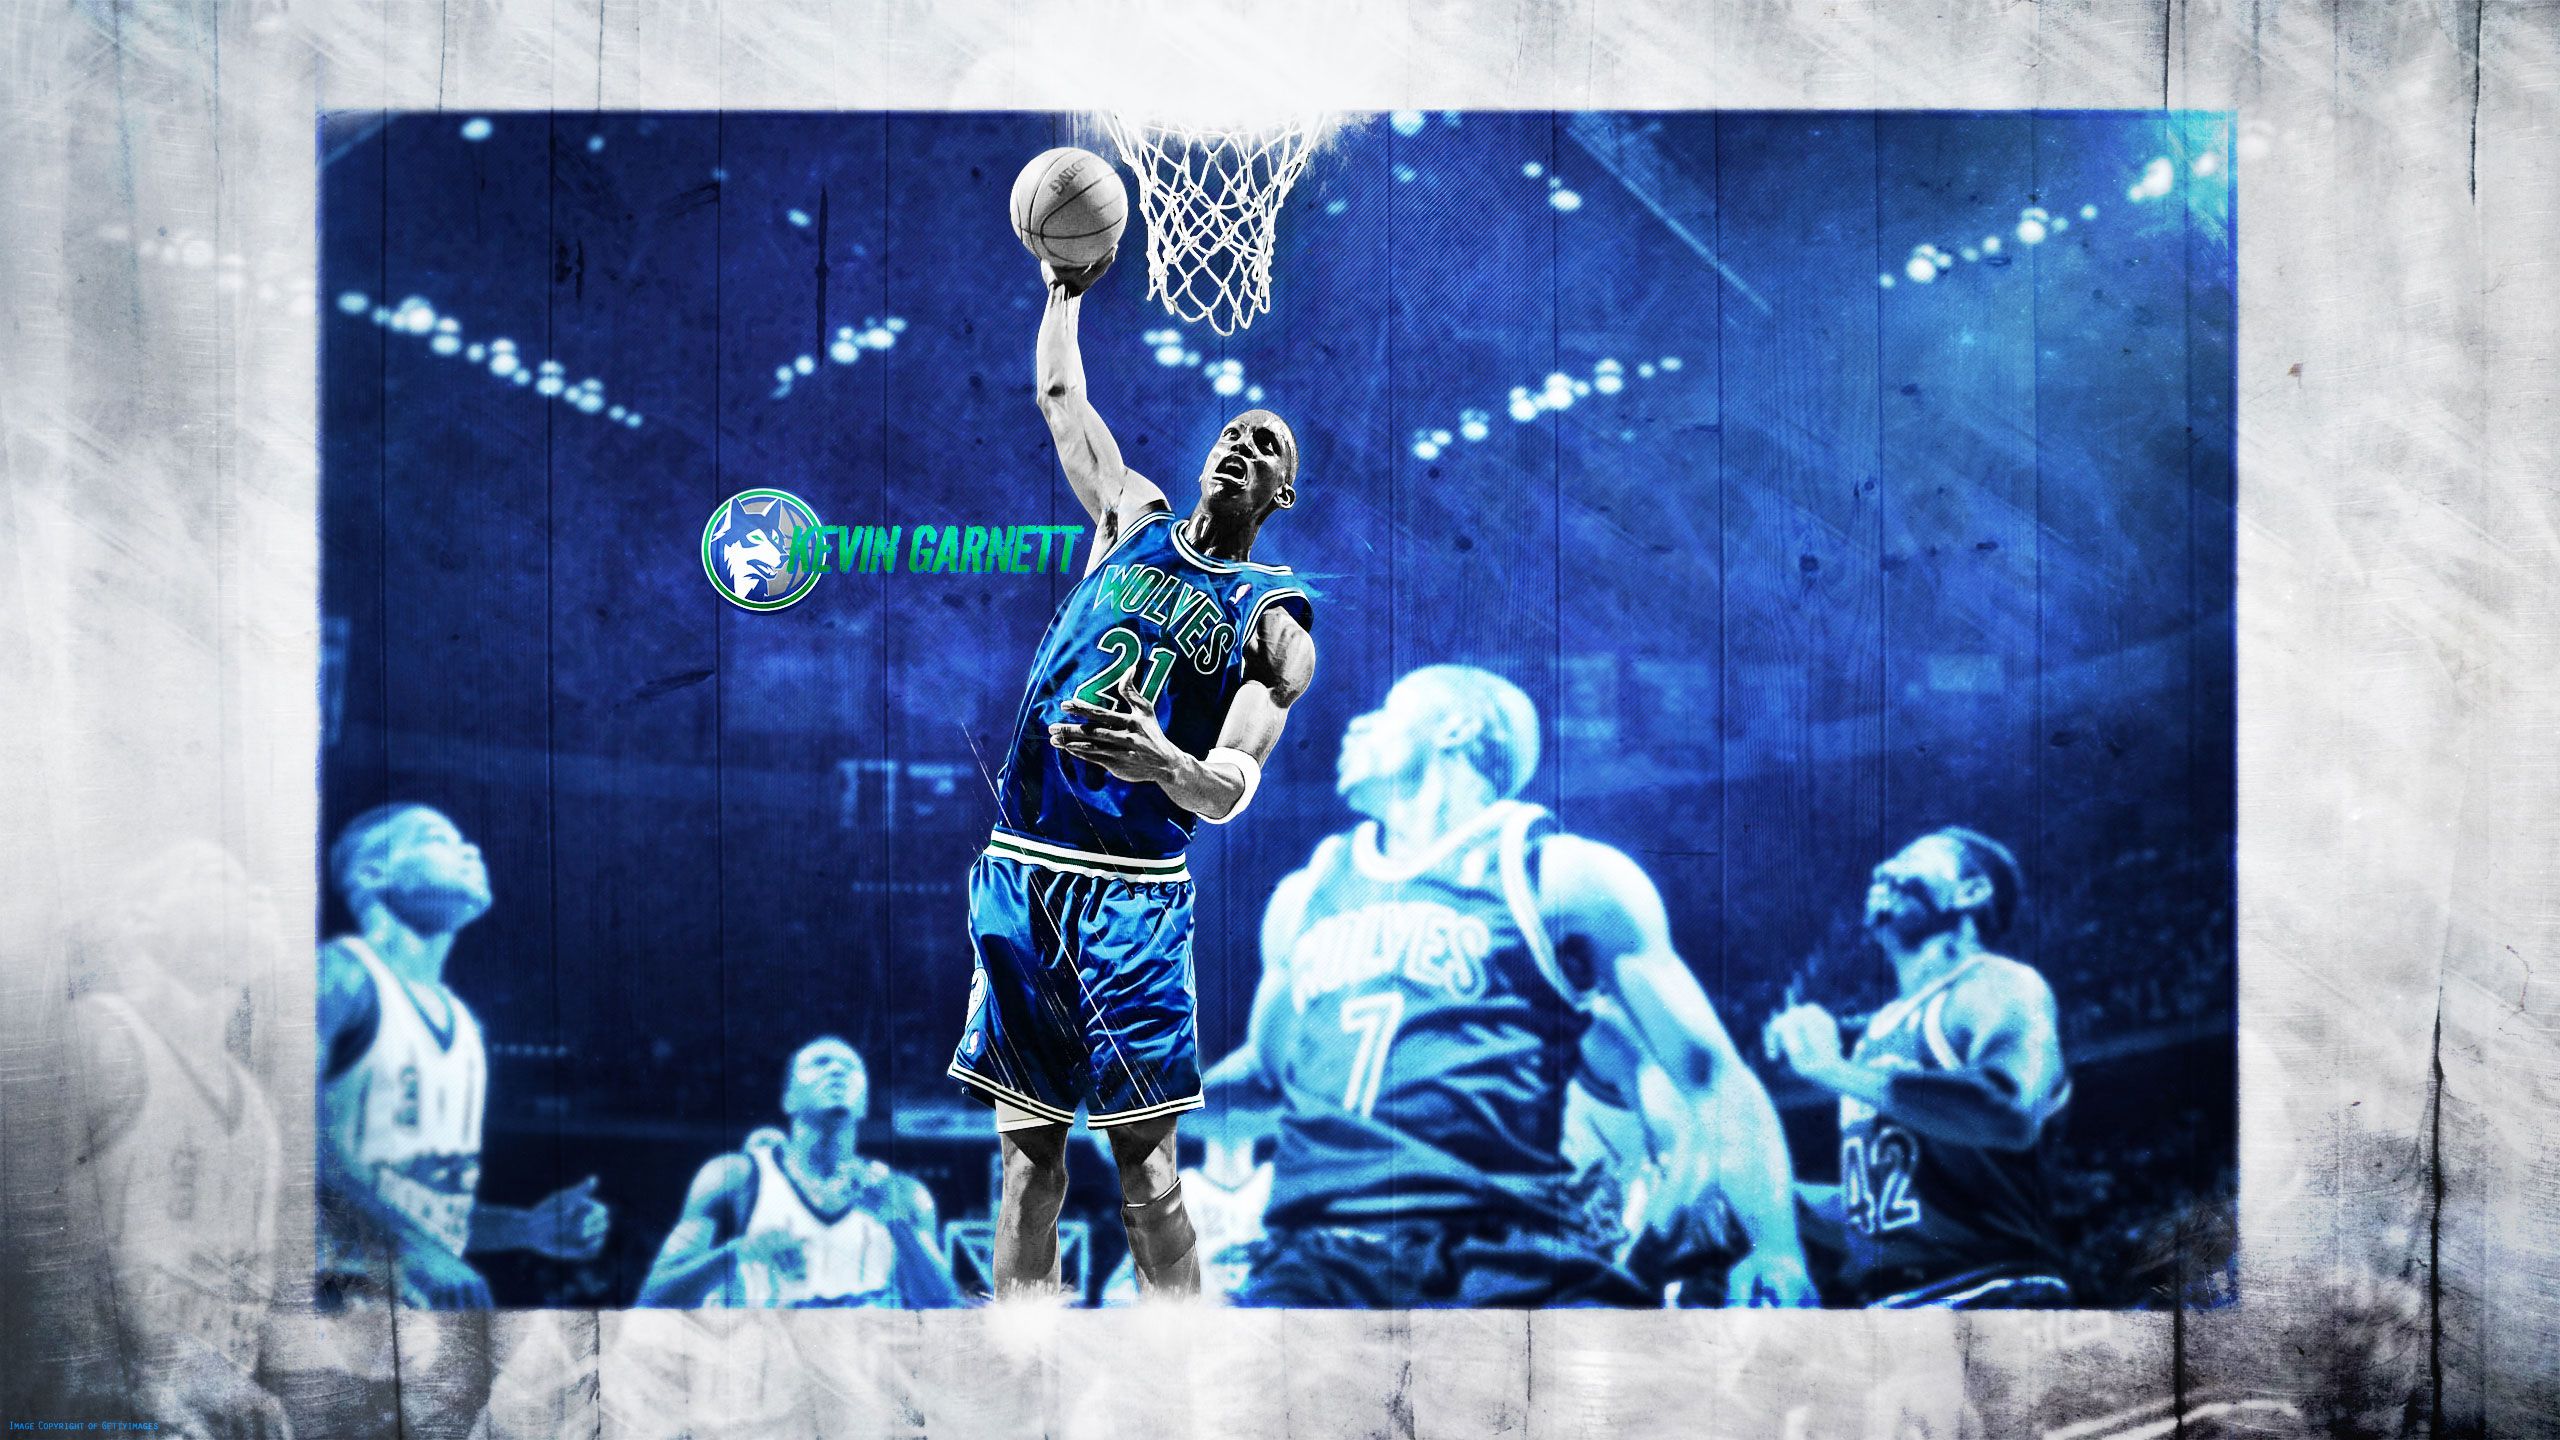 Kevin Garnett Wallpapers | Basketball Wallpapers at ...